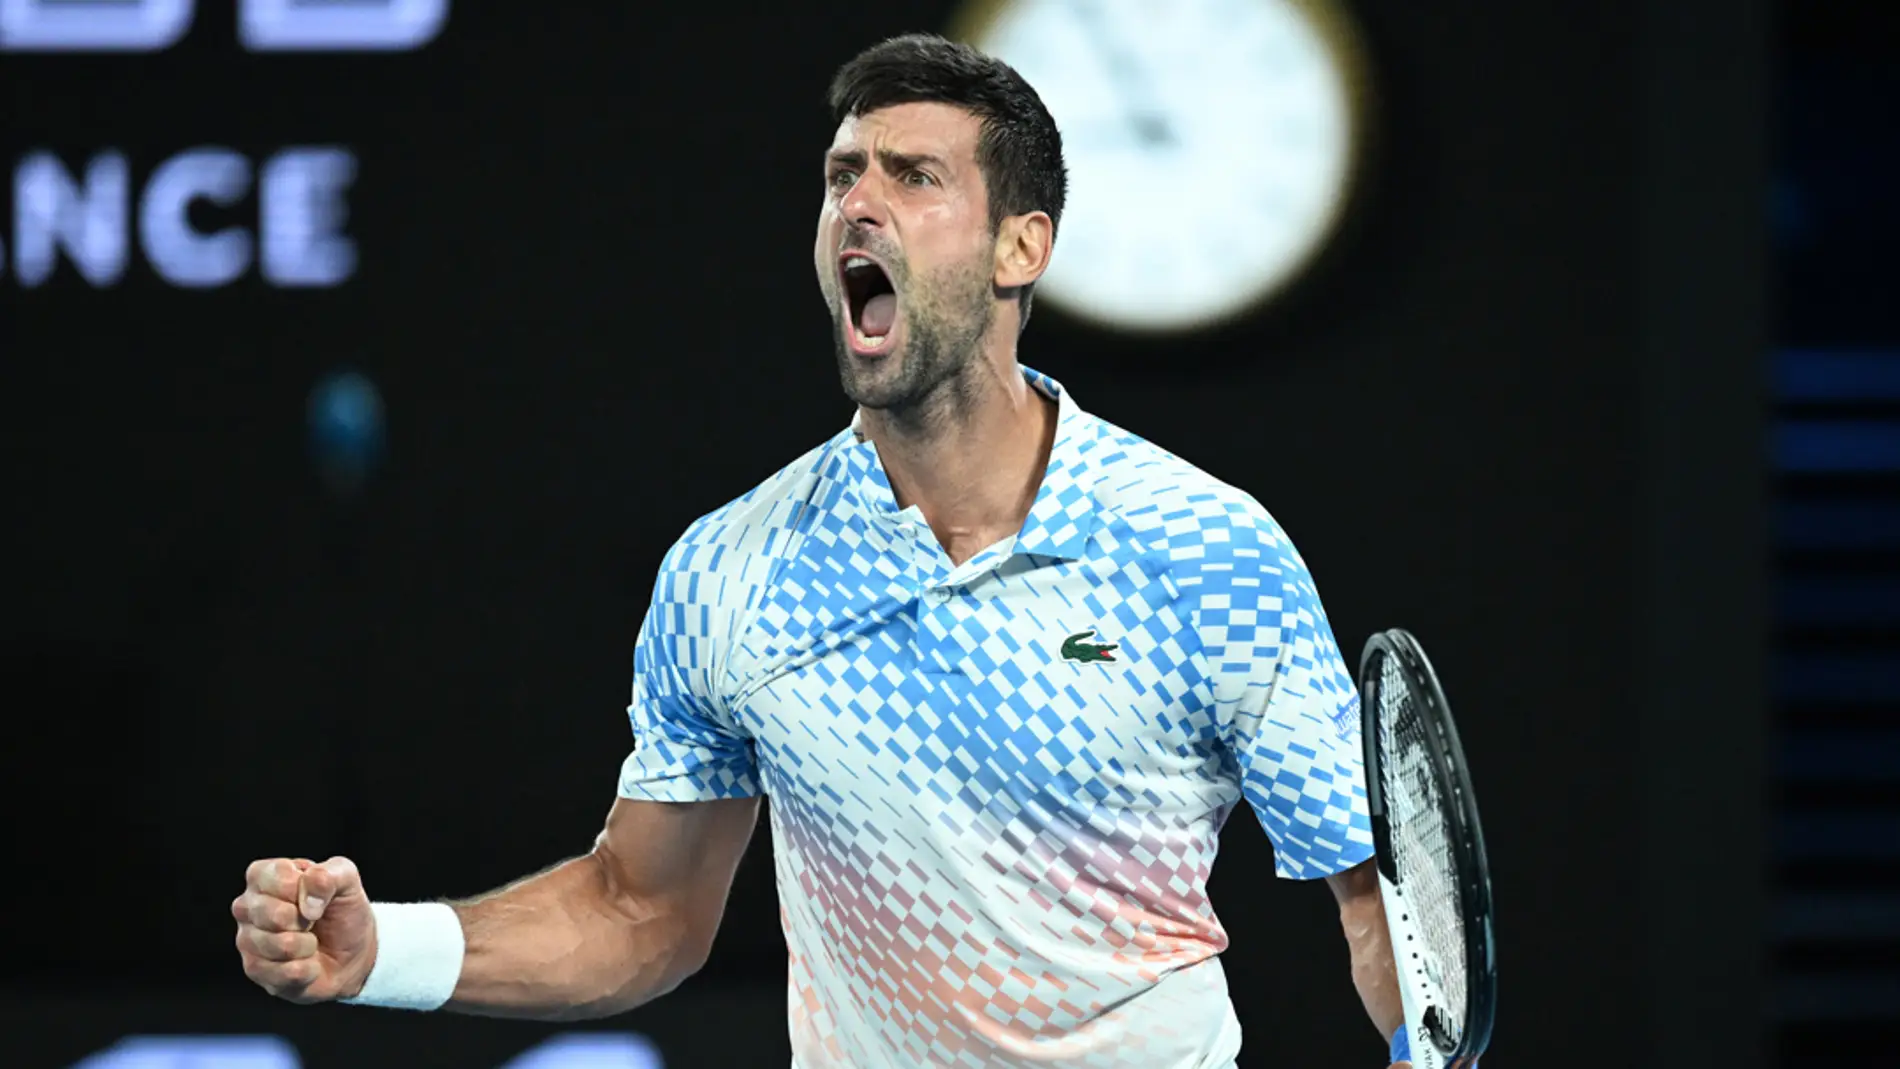 Djokovic se mete en la final del Open de Australia tras arrasar a Paul